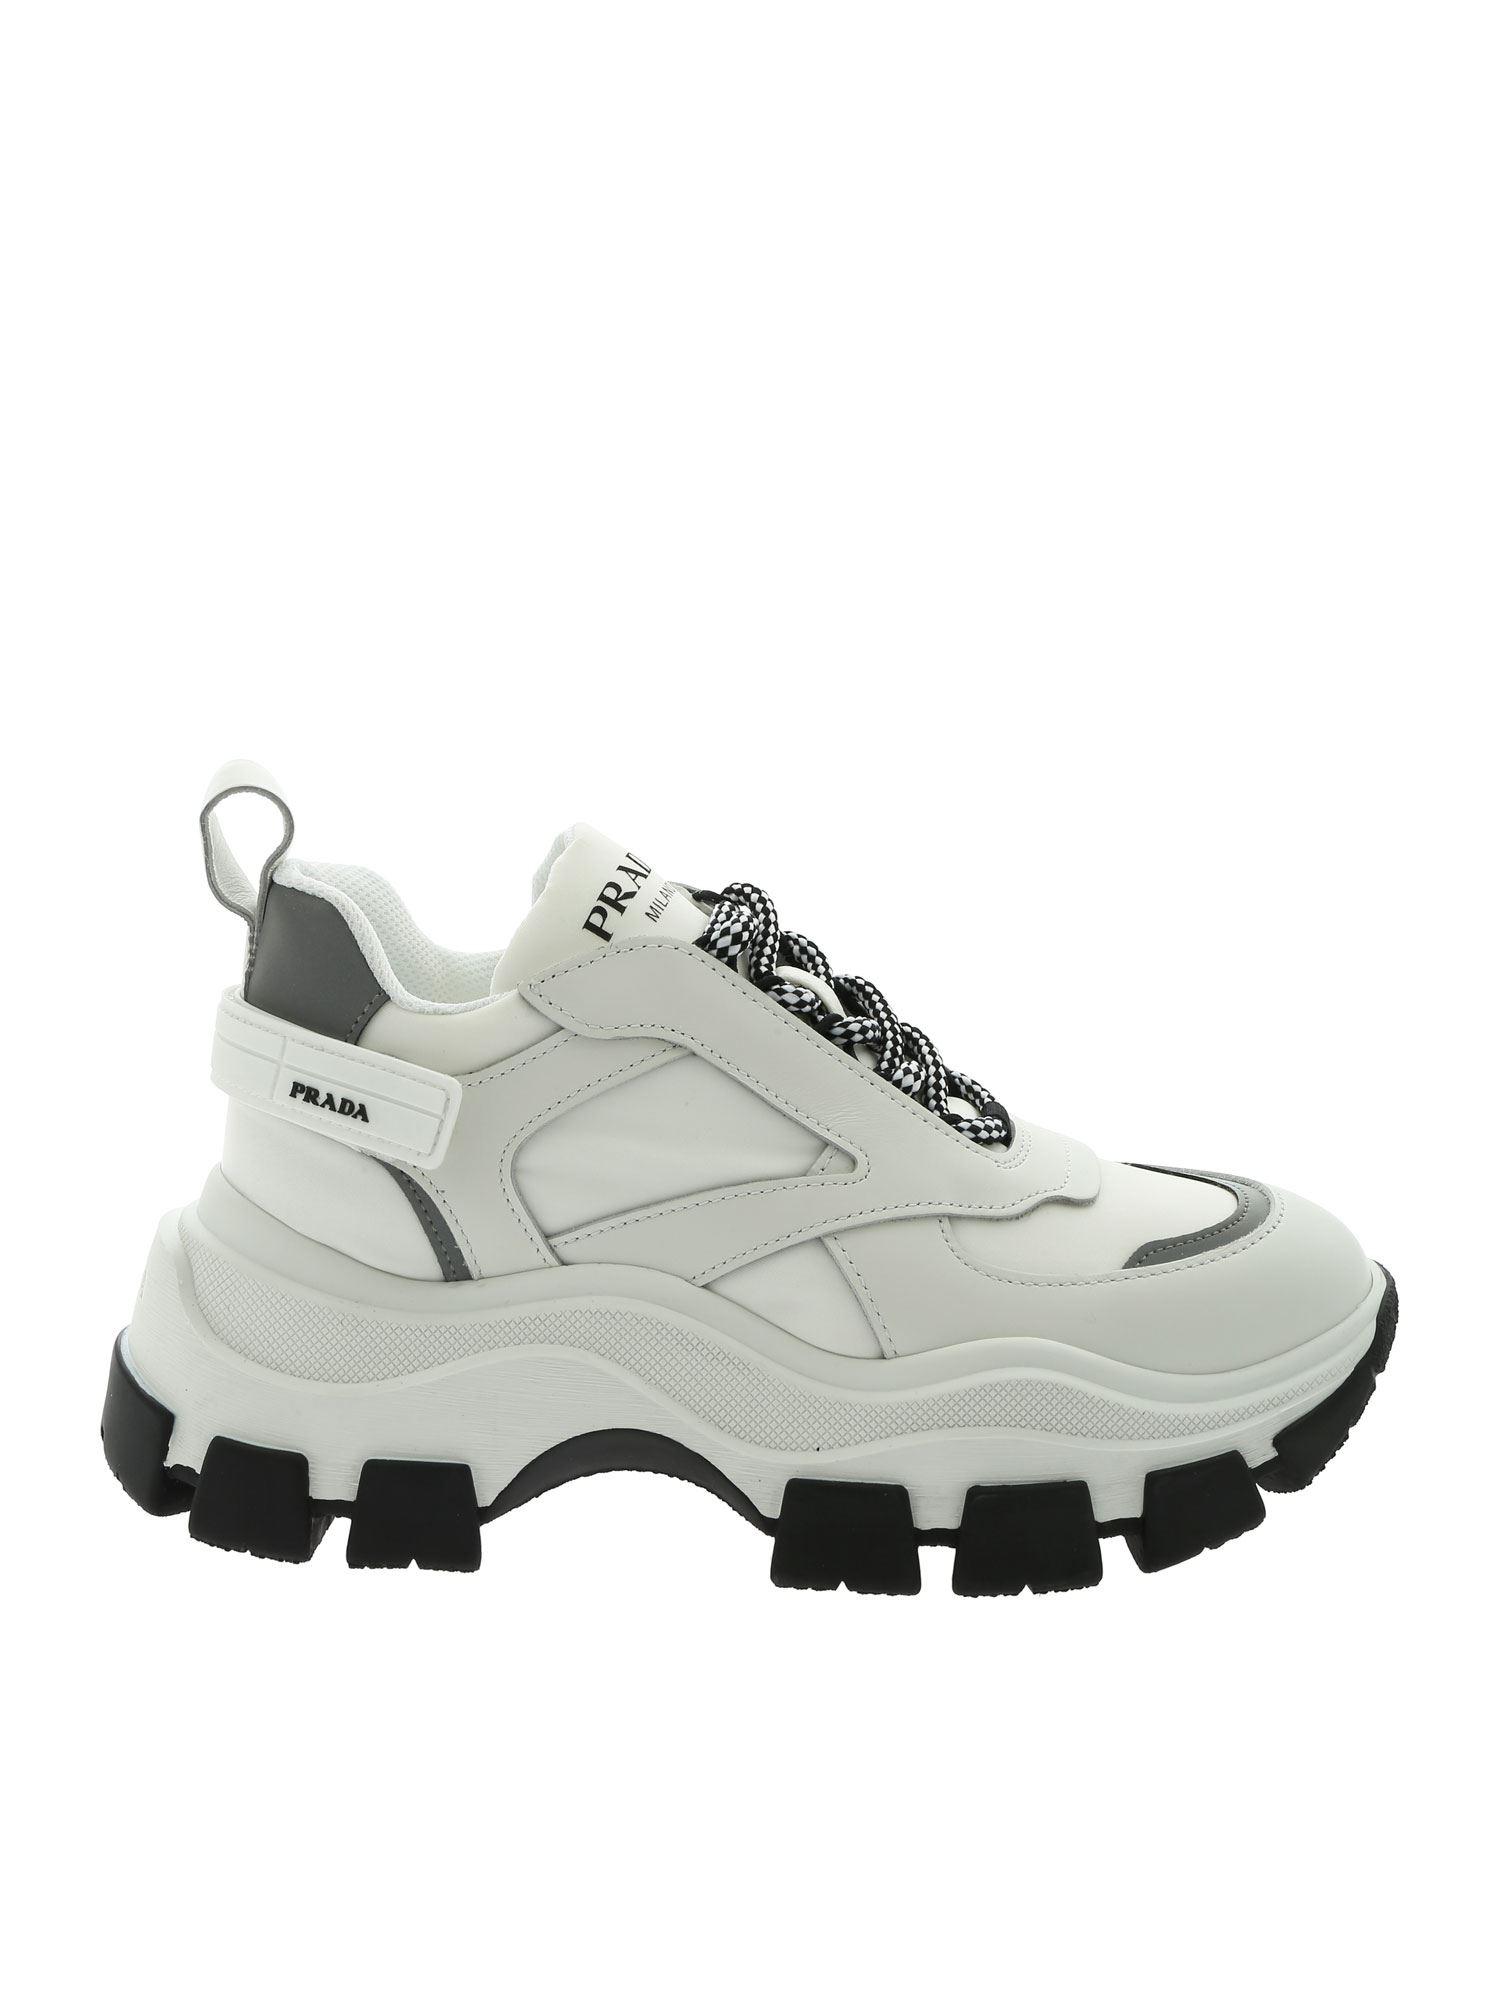 Prada Leather Block Sneakers In White - Lyst